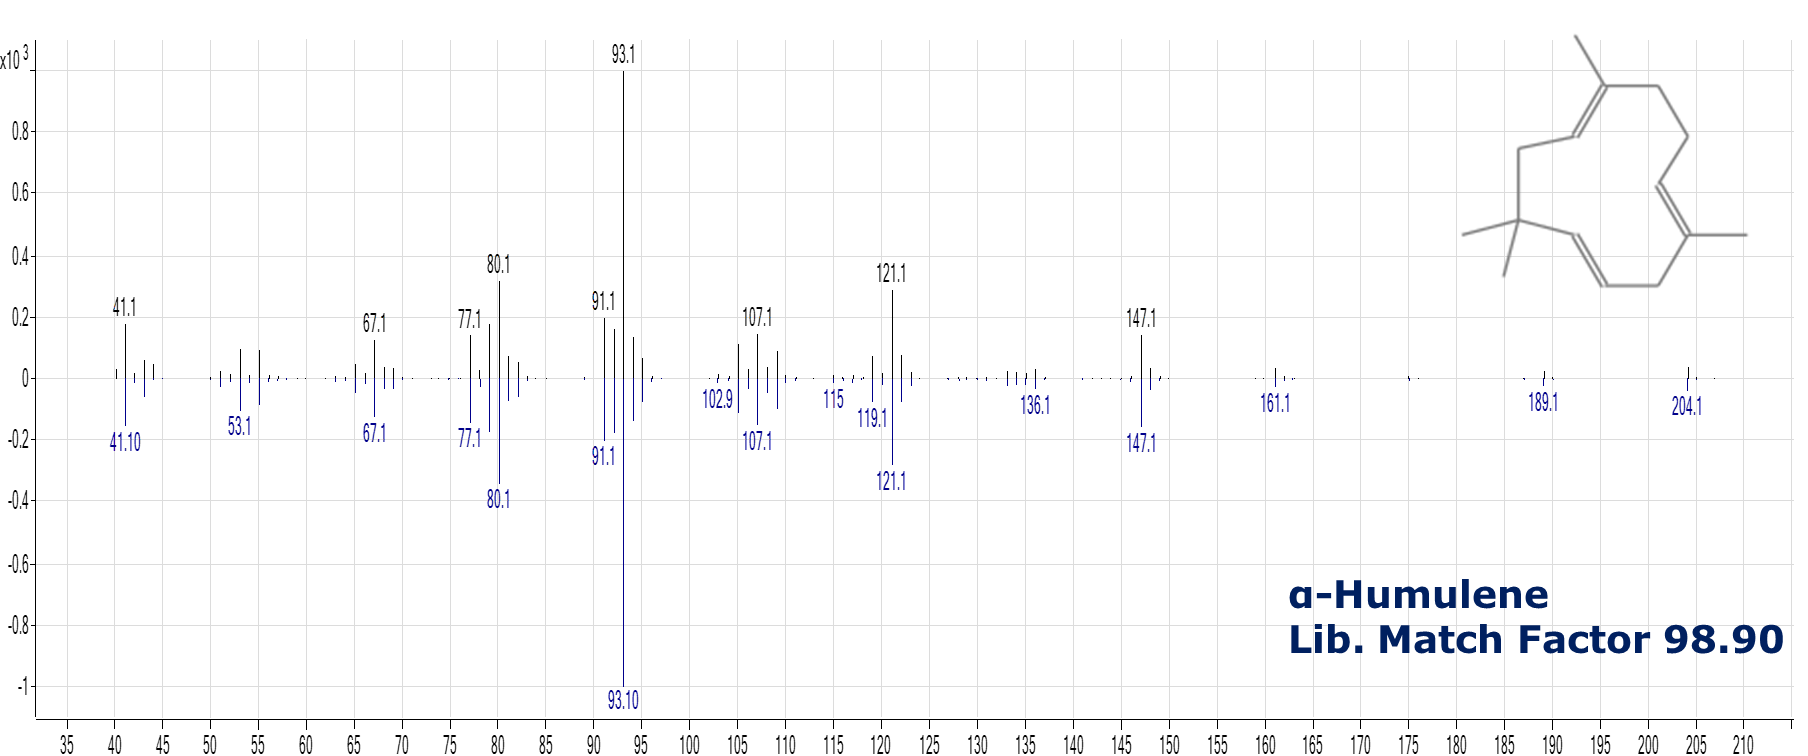 MS spectra of peak at 13.082 min α-Humulene